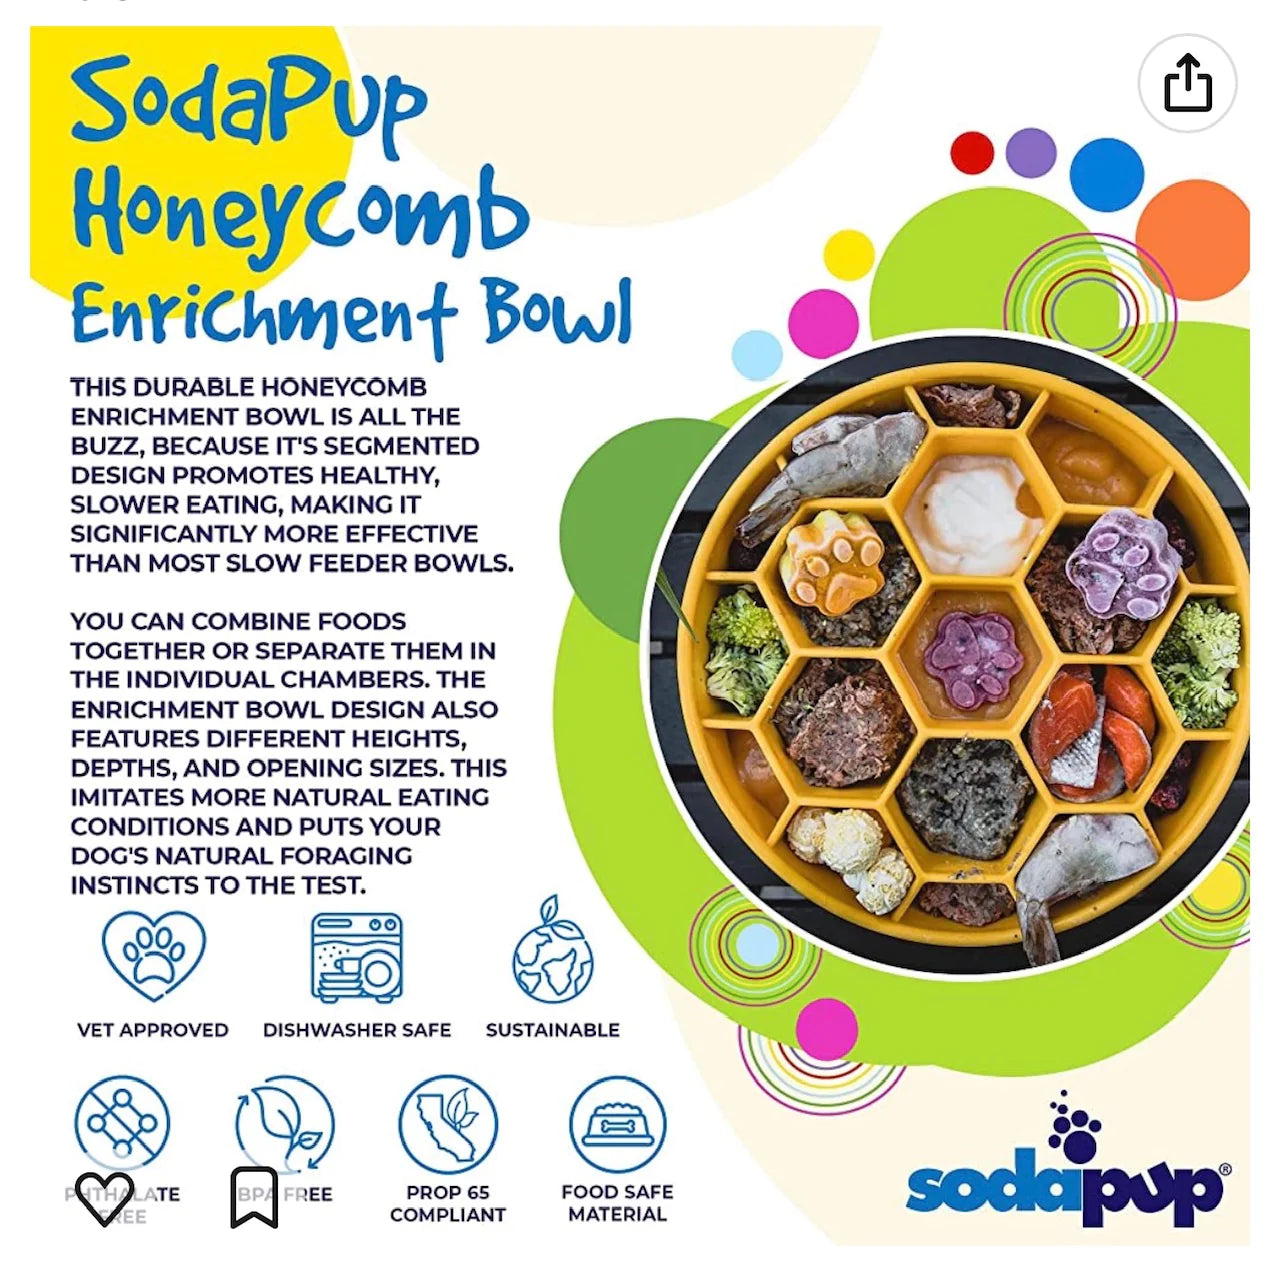 Sodapup eBowl Honeycomb